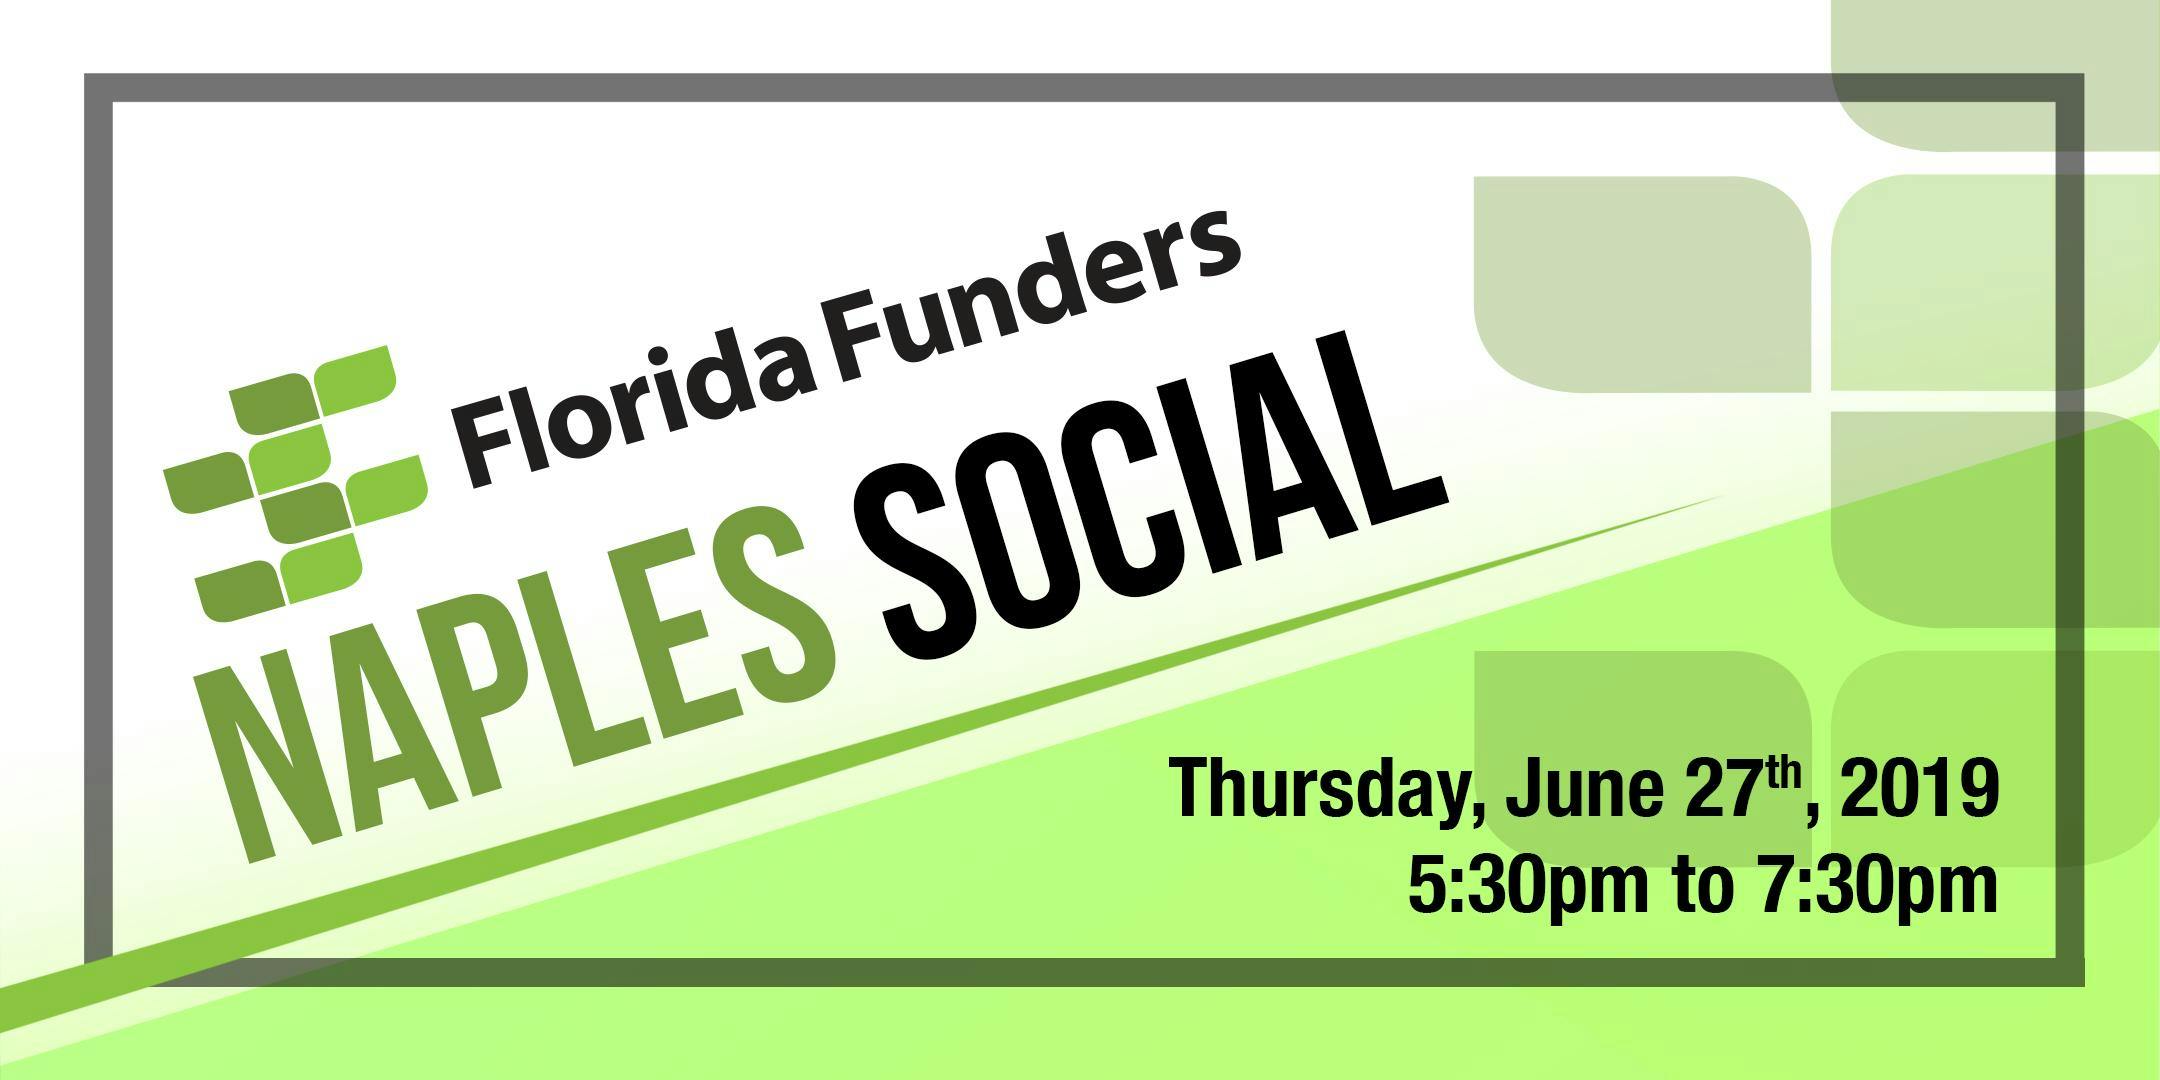 Florida Funders Naples Social